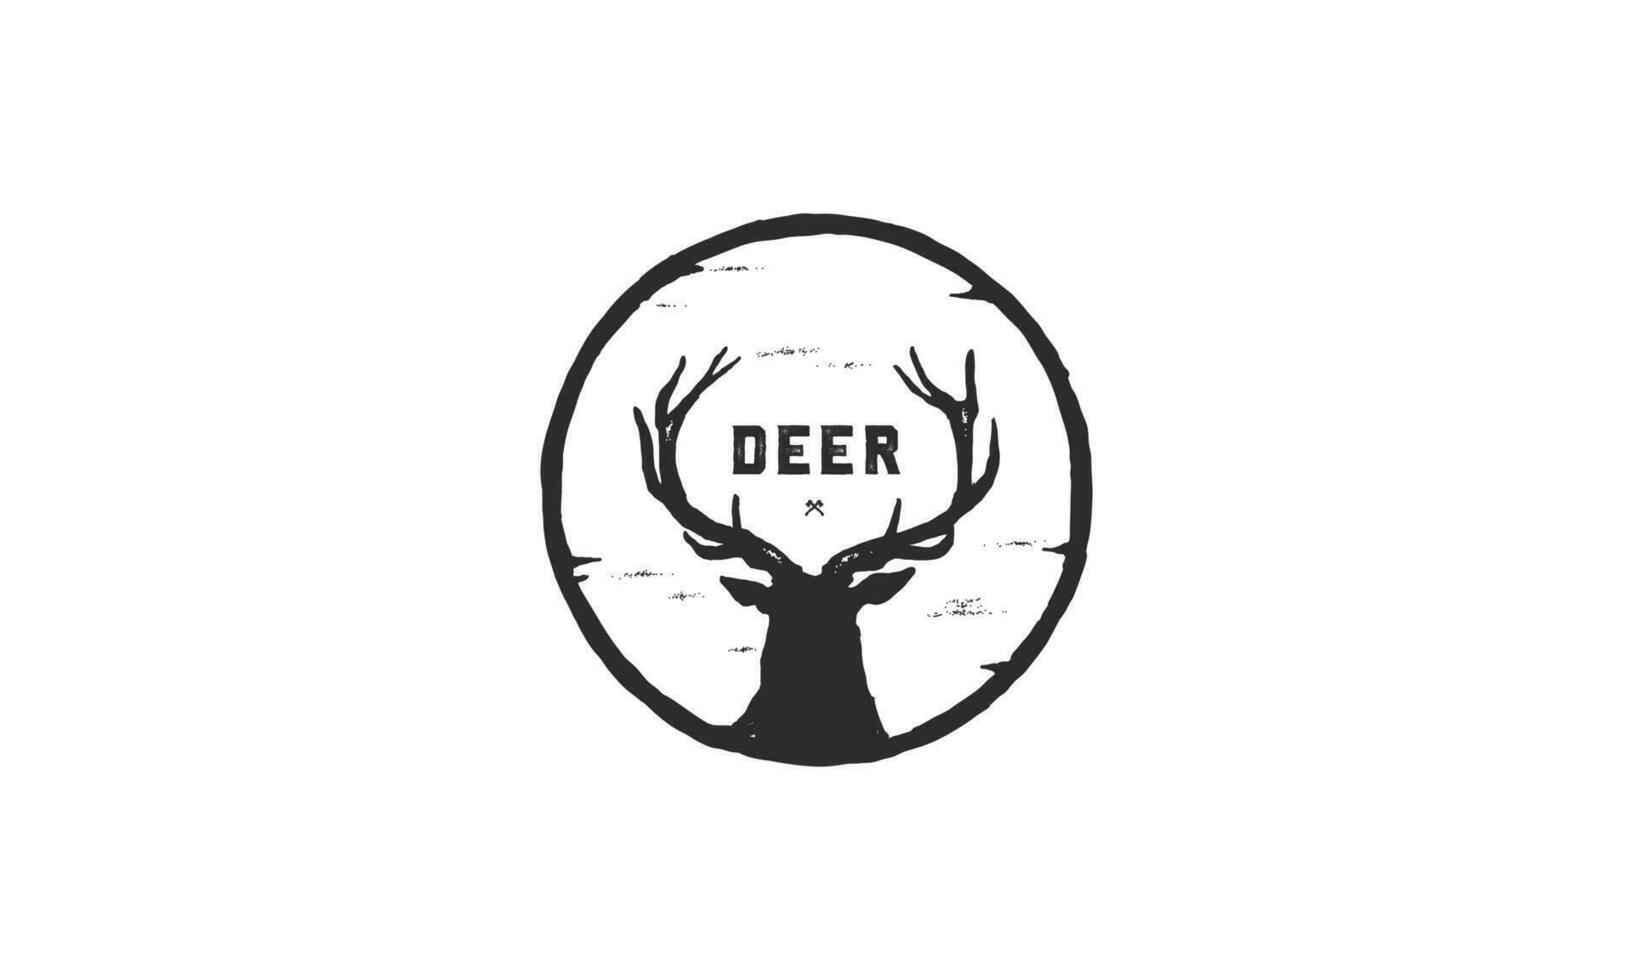 Wild reindeer outdoor brand label. Elk antlers sign. Wildlife stag symbol. Vector illustration.